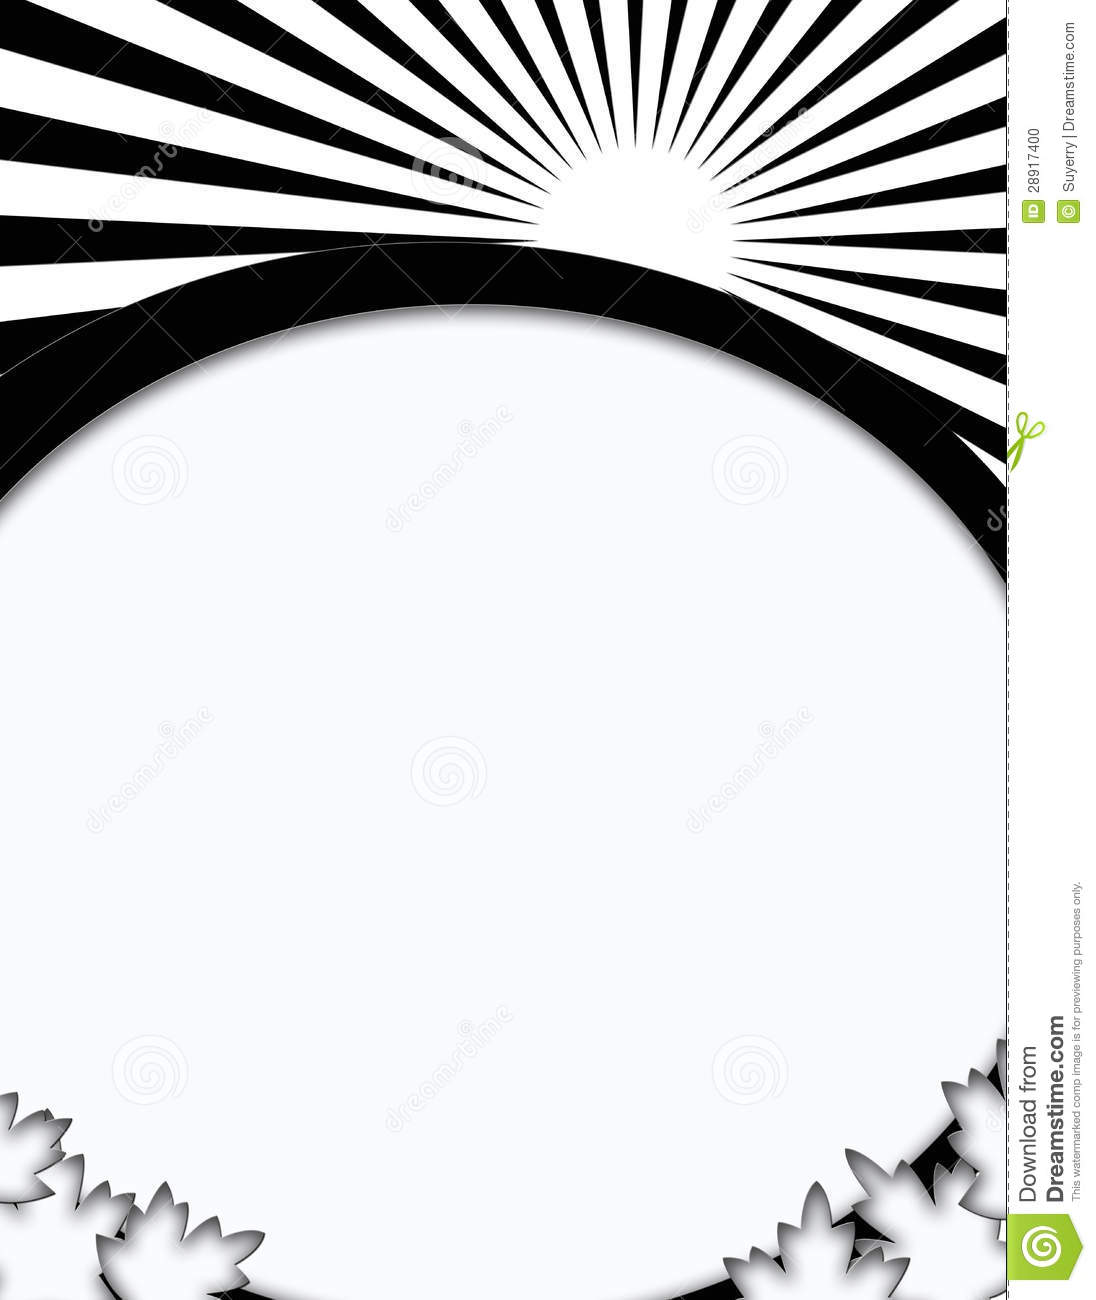 Black And White Sunrise Design With White Blank Center As Black